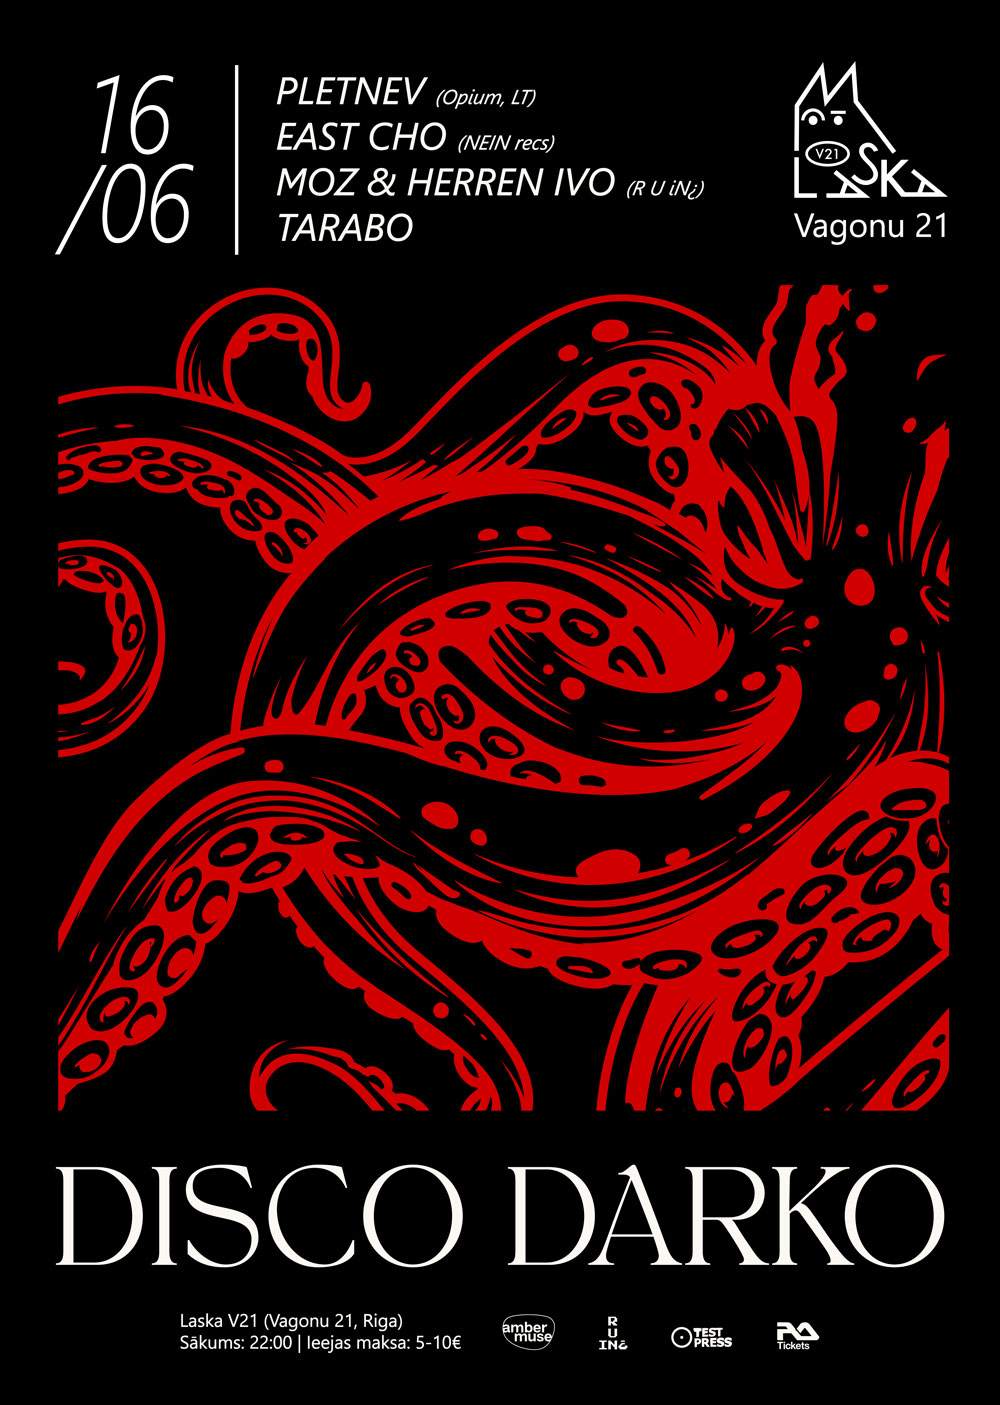 Disco Darko with Pletnev (Opium, LT) - Página frontal